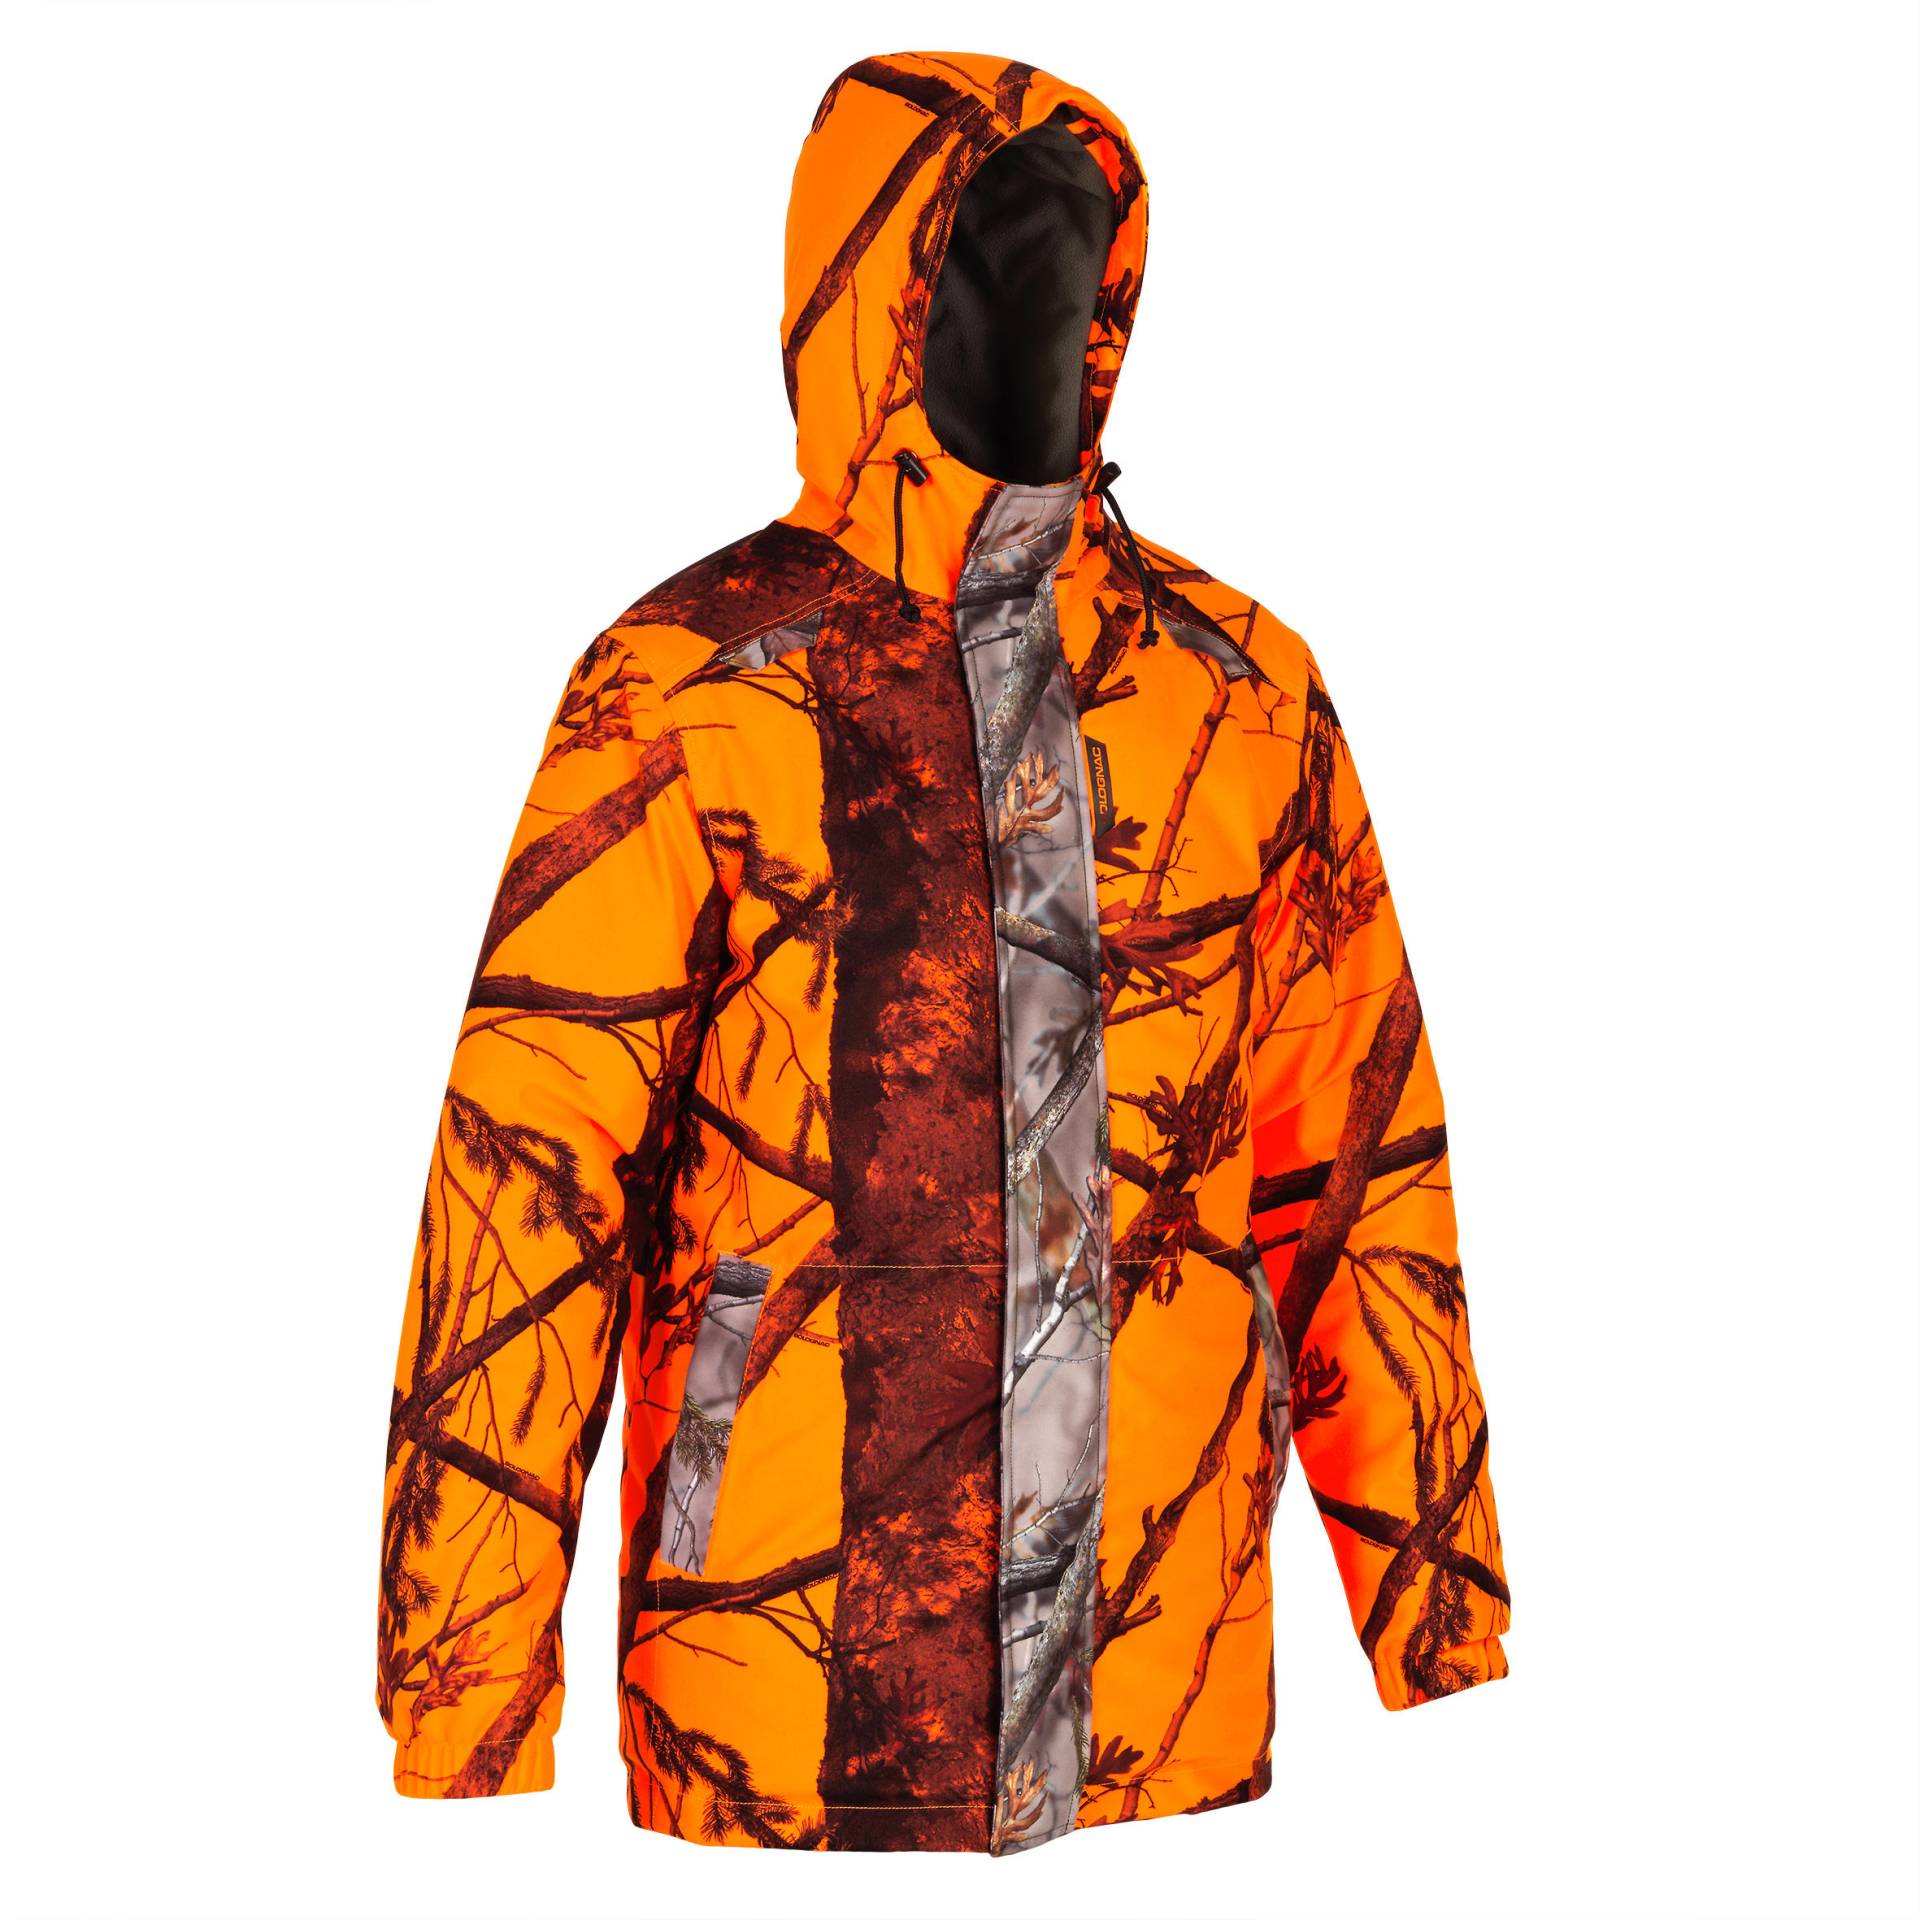 Jagdjacke Regenjacke 100 warm geräuscharm Camouflage/orange von SOLOGNAC